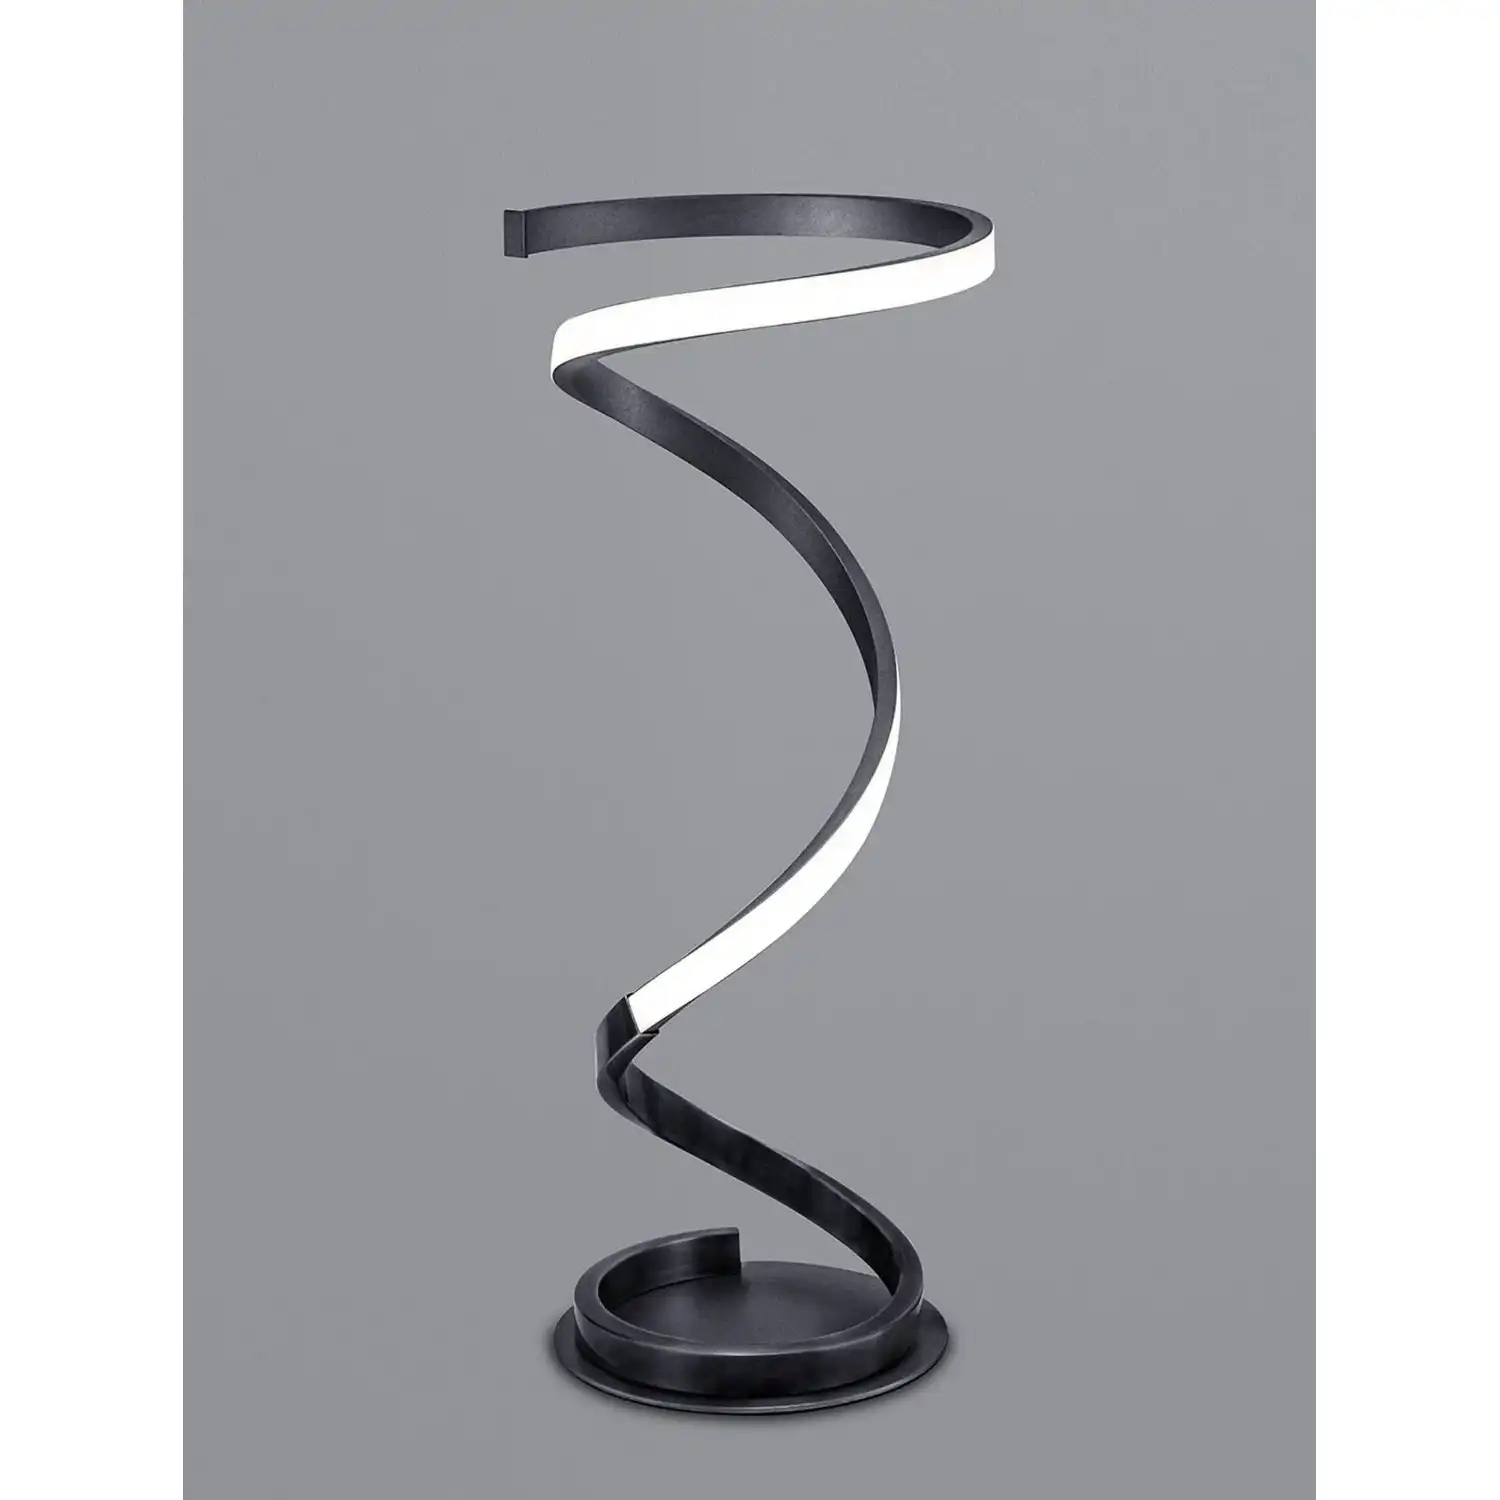 Helix Table Lamp 52cm, 20W LED, 3000K, 1600lm, Black, 3yrs Warranty